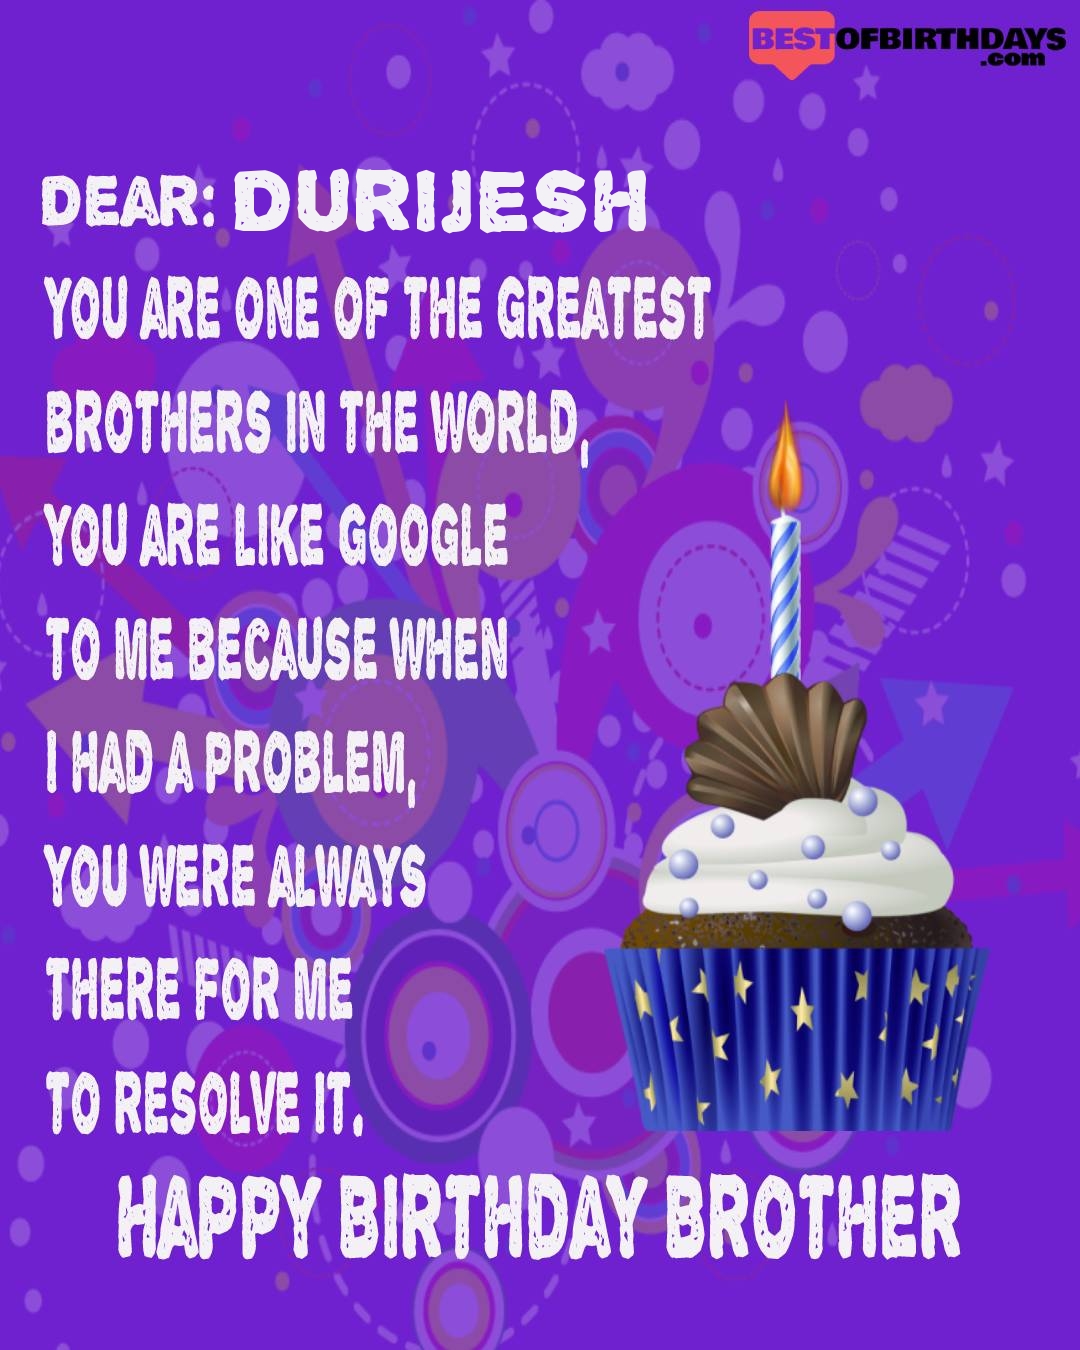 Happy birthday durijesh bhai brother bro